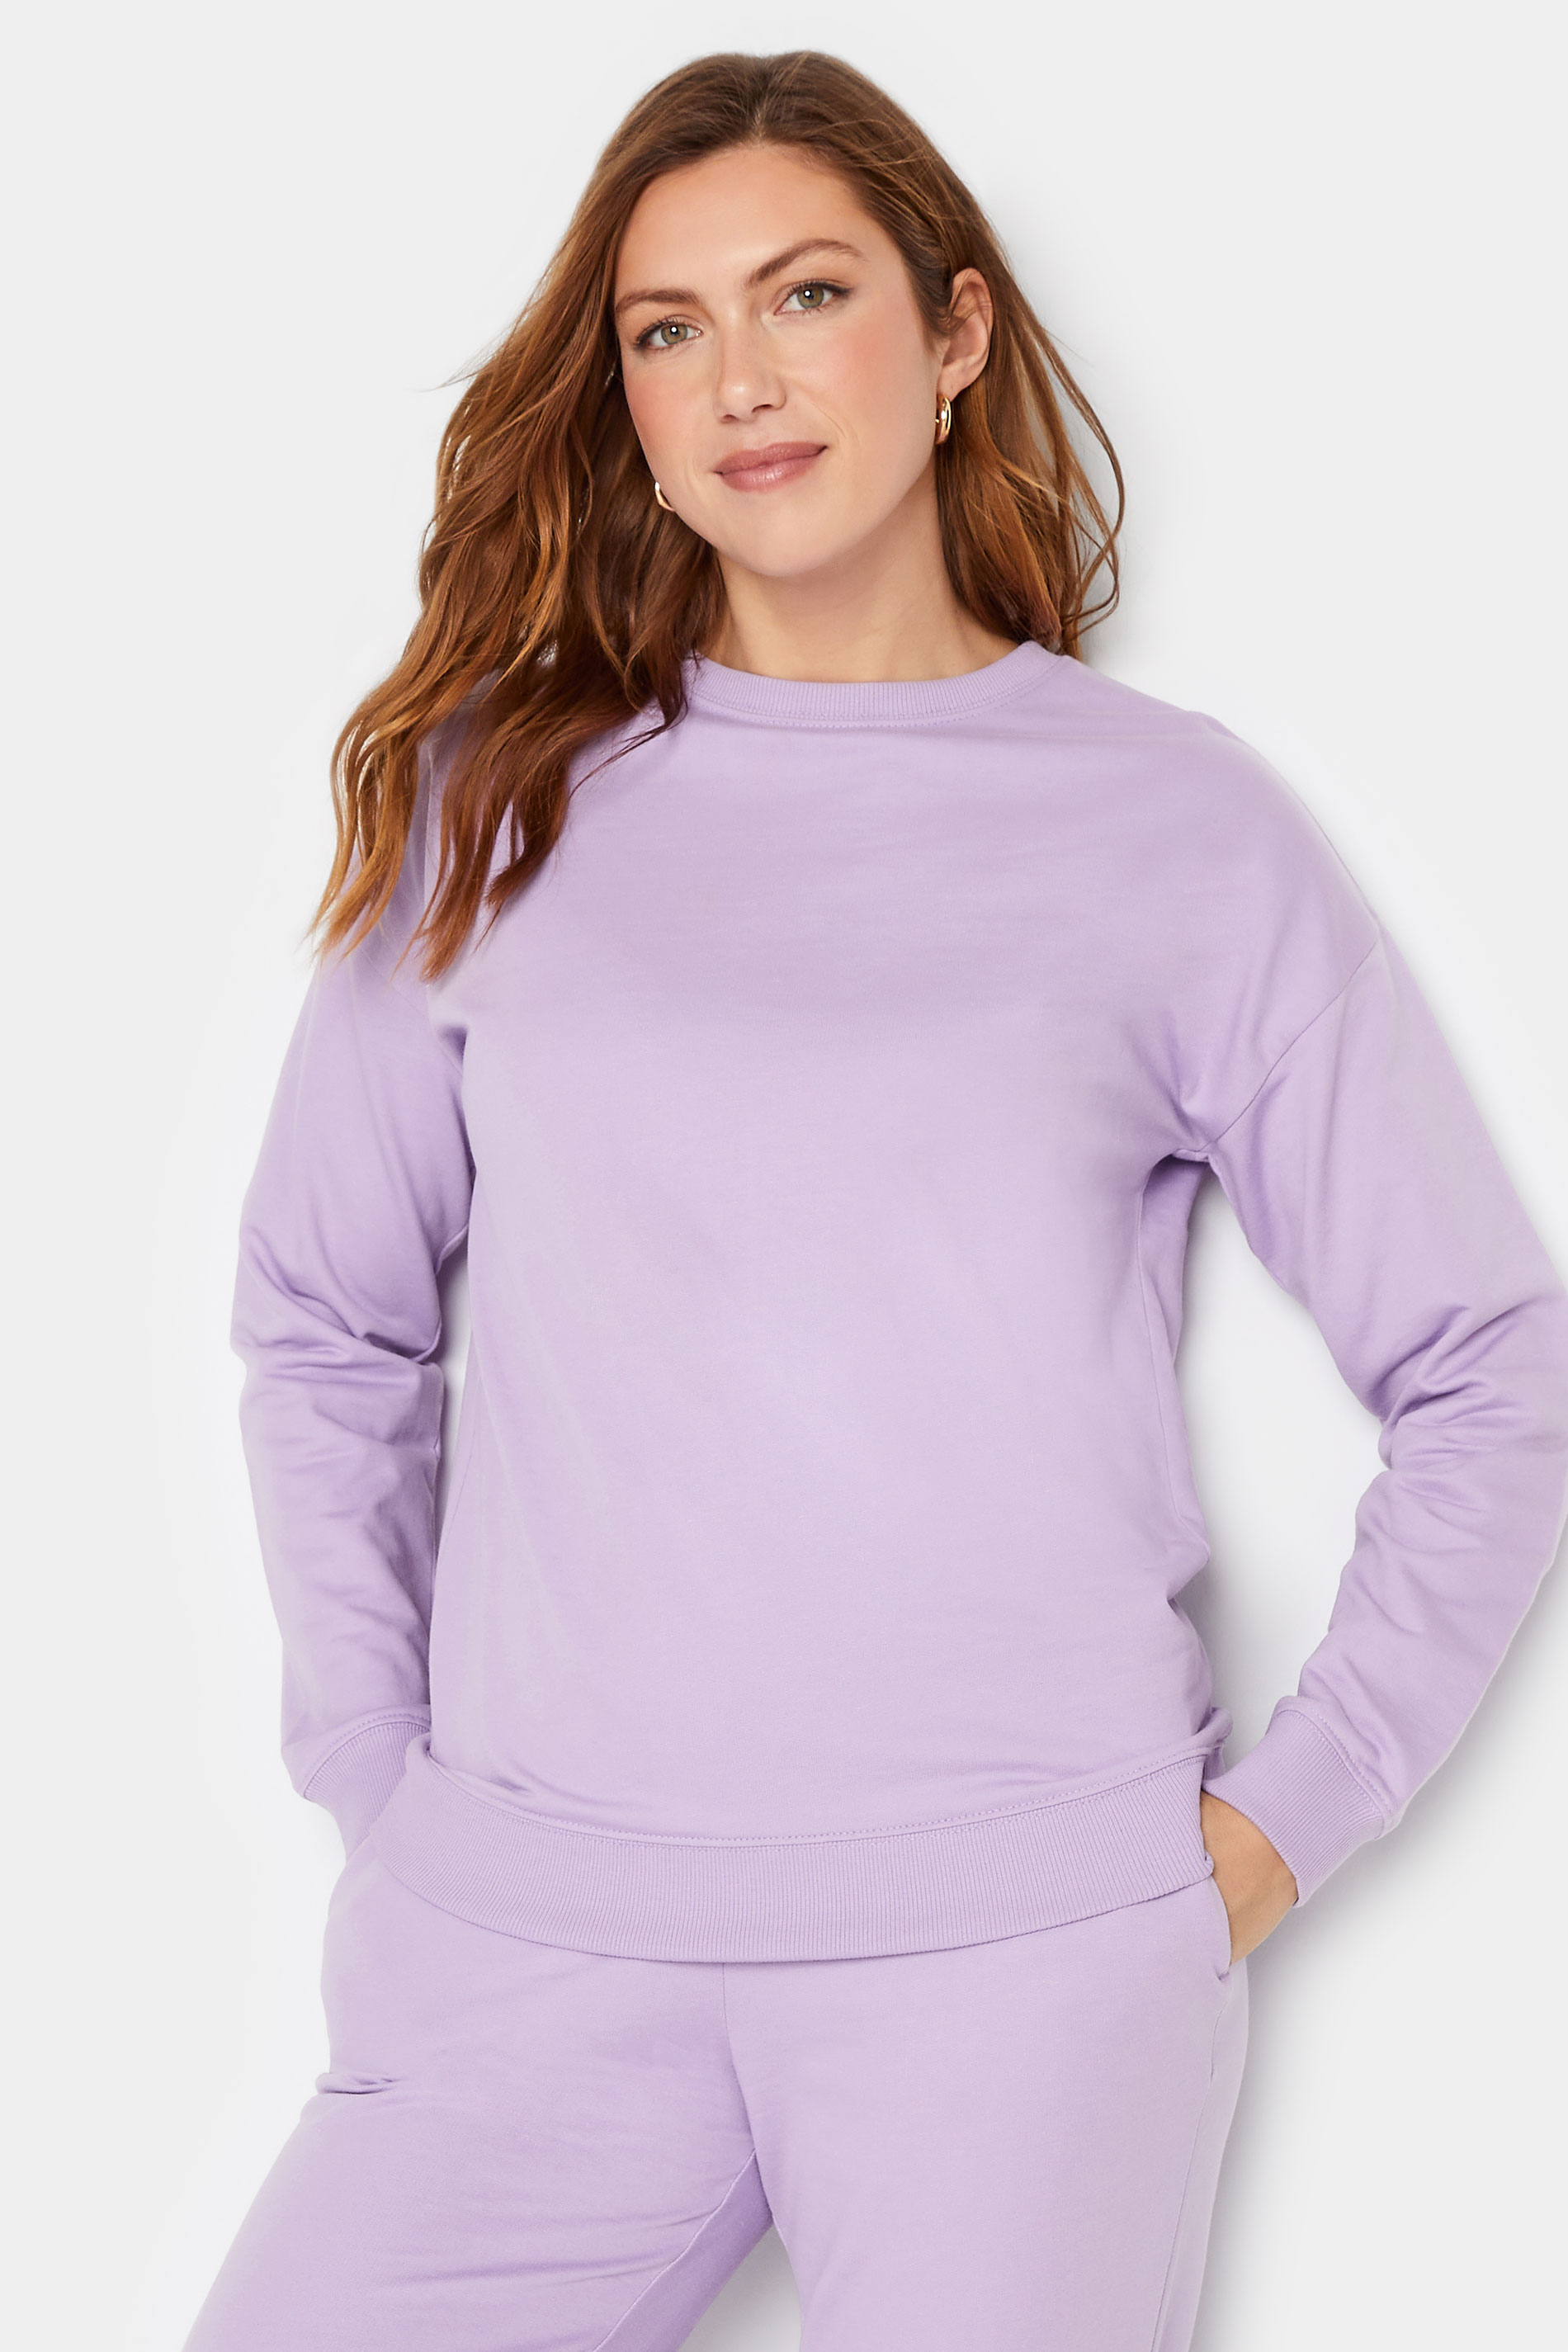 LTS Tall Lilac Purple Long Sleeve Sweatshirt | Long Tall Sally  1